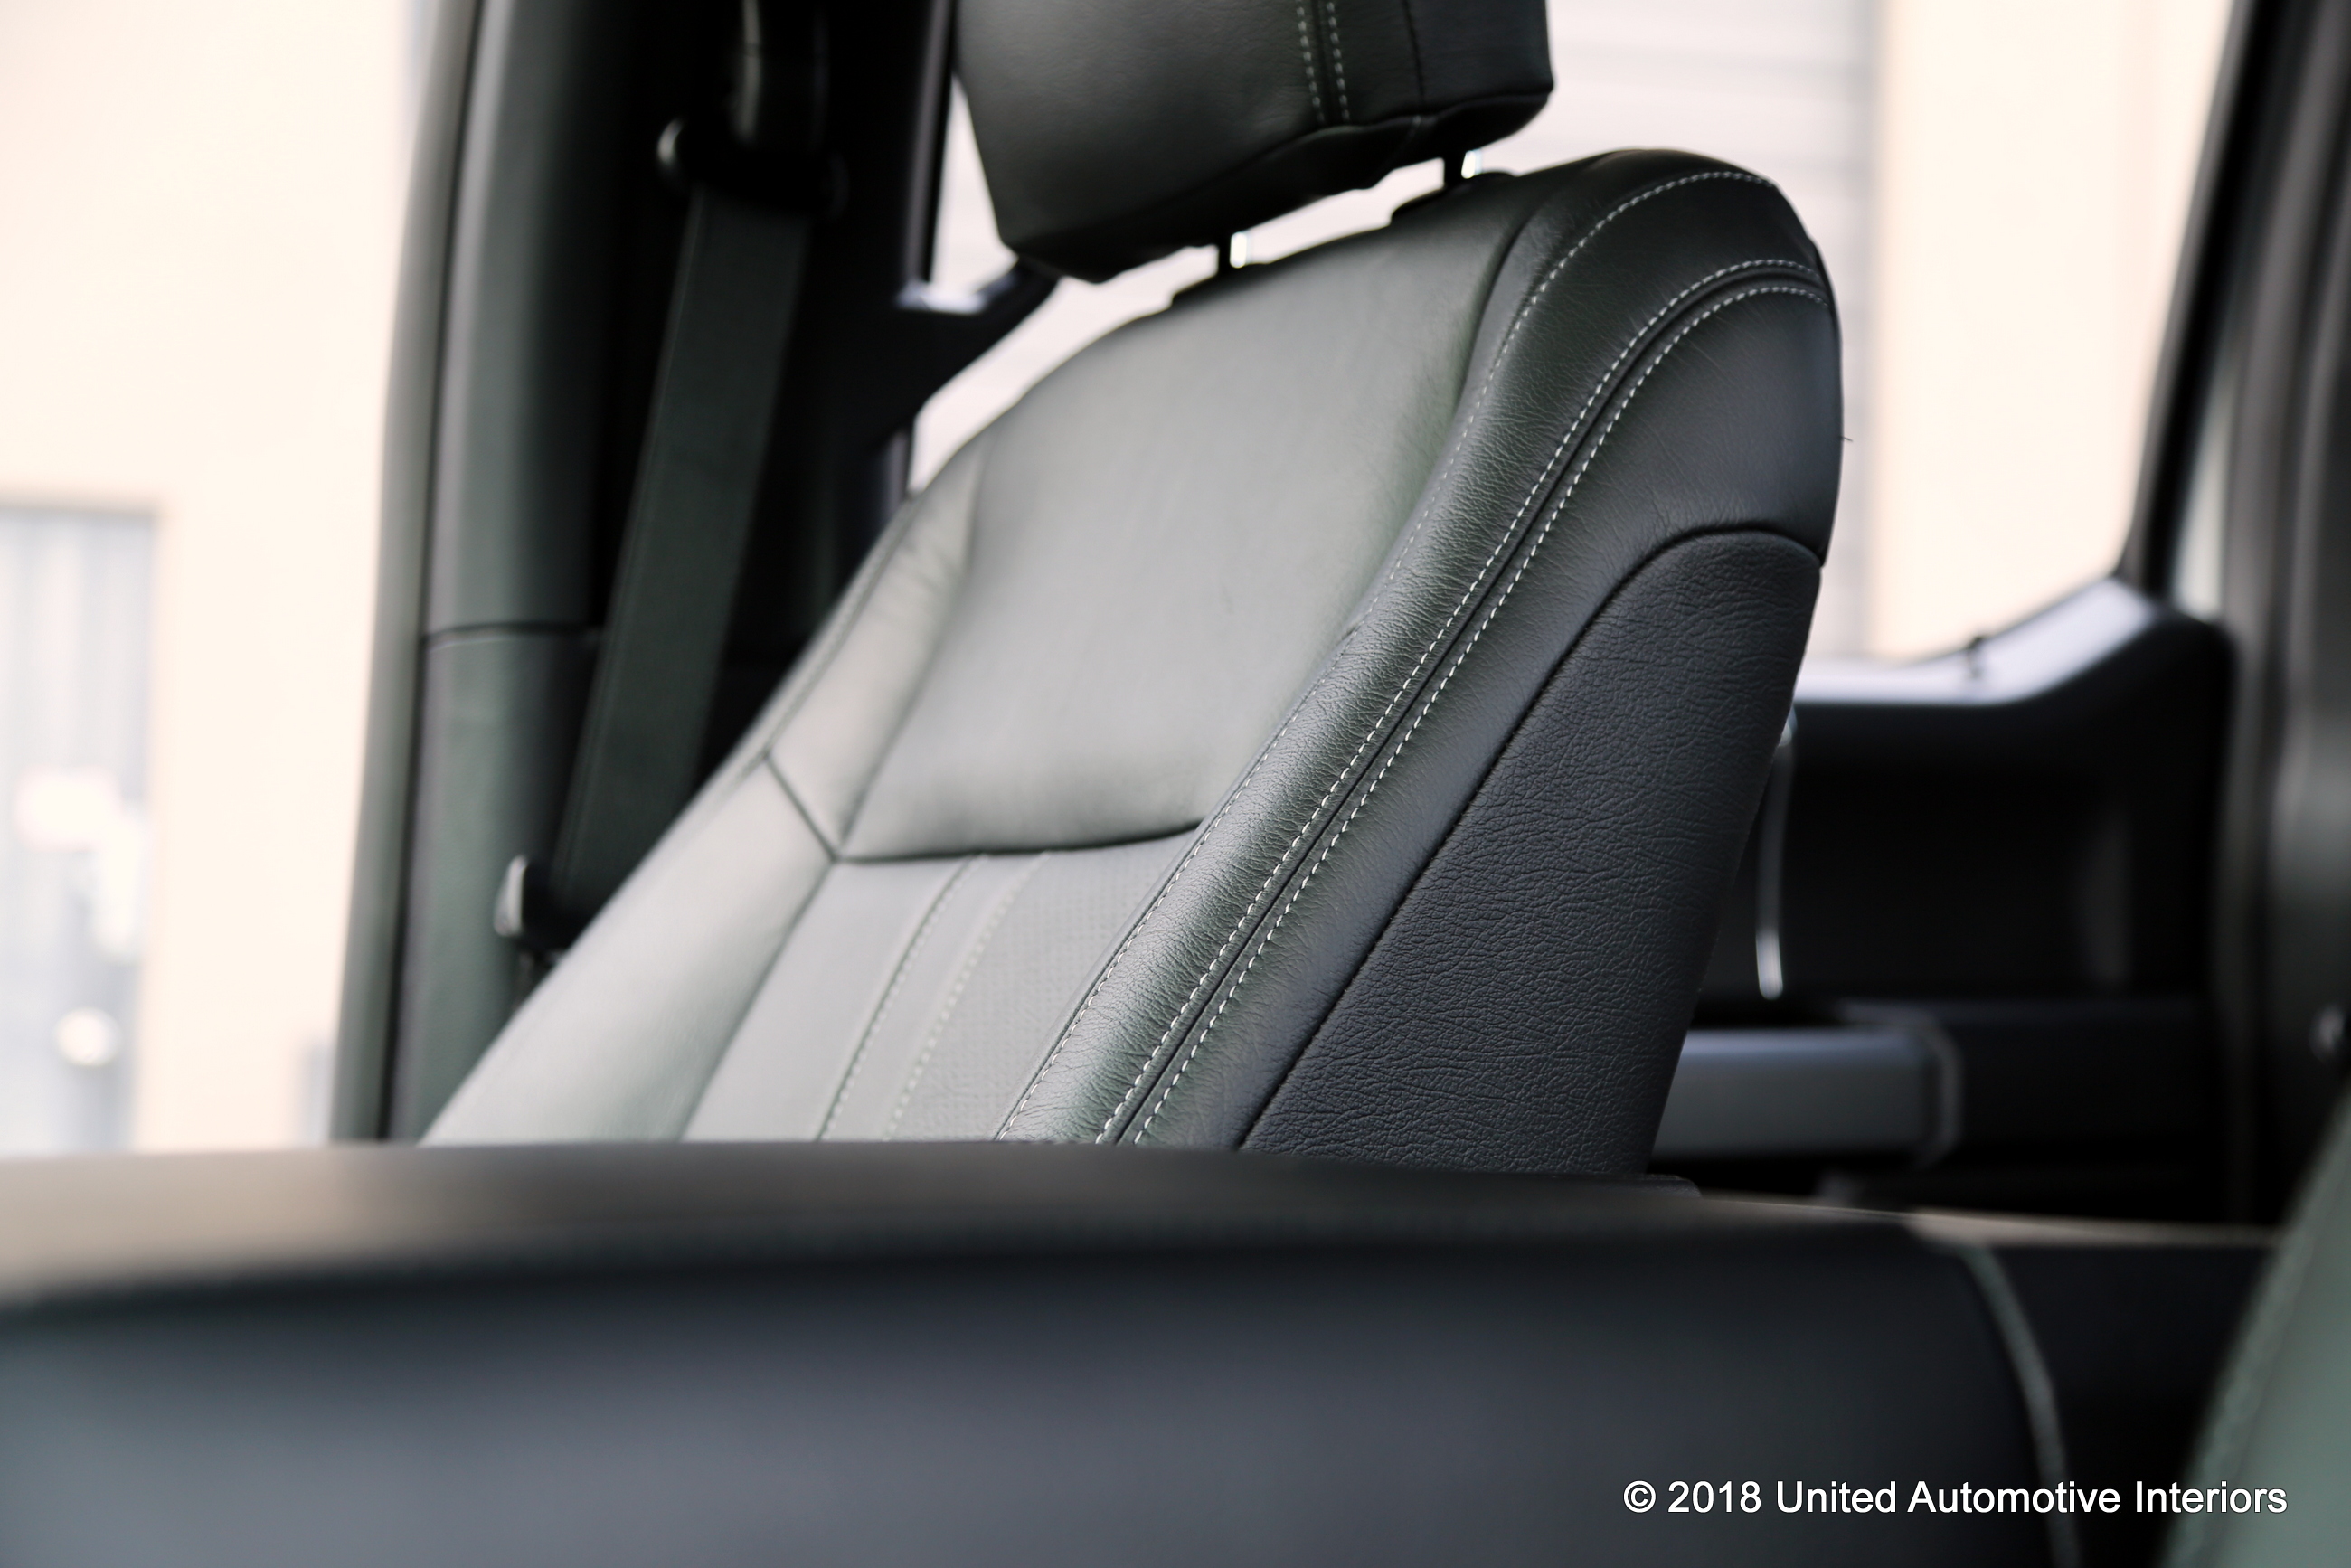 2019 Subaru XV Interior Features and Seating Options | Subaru